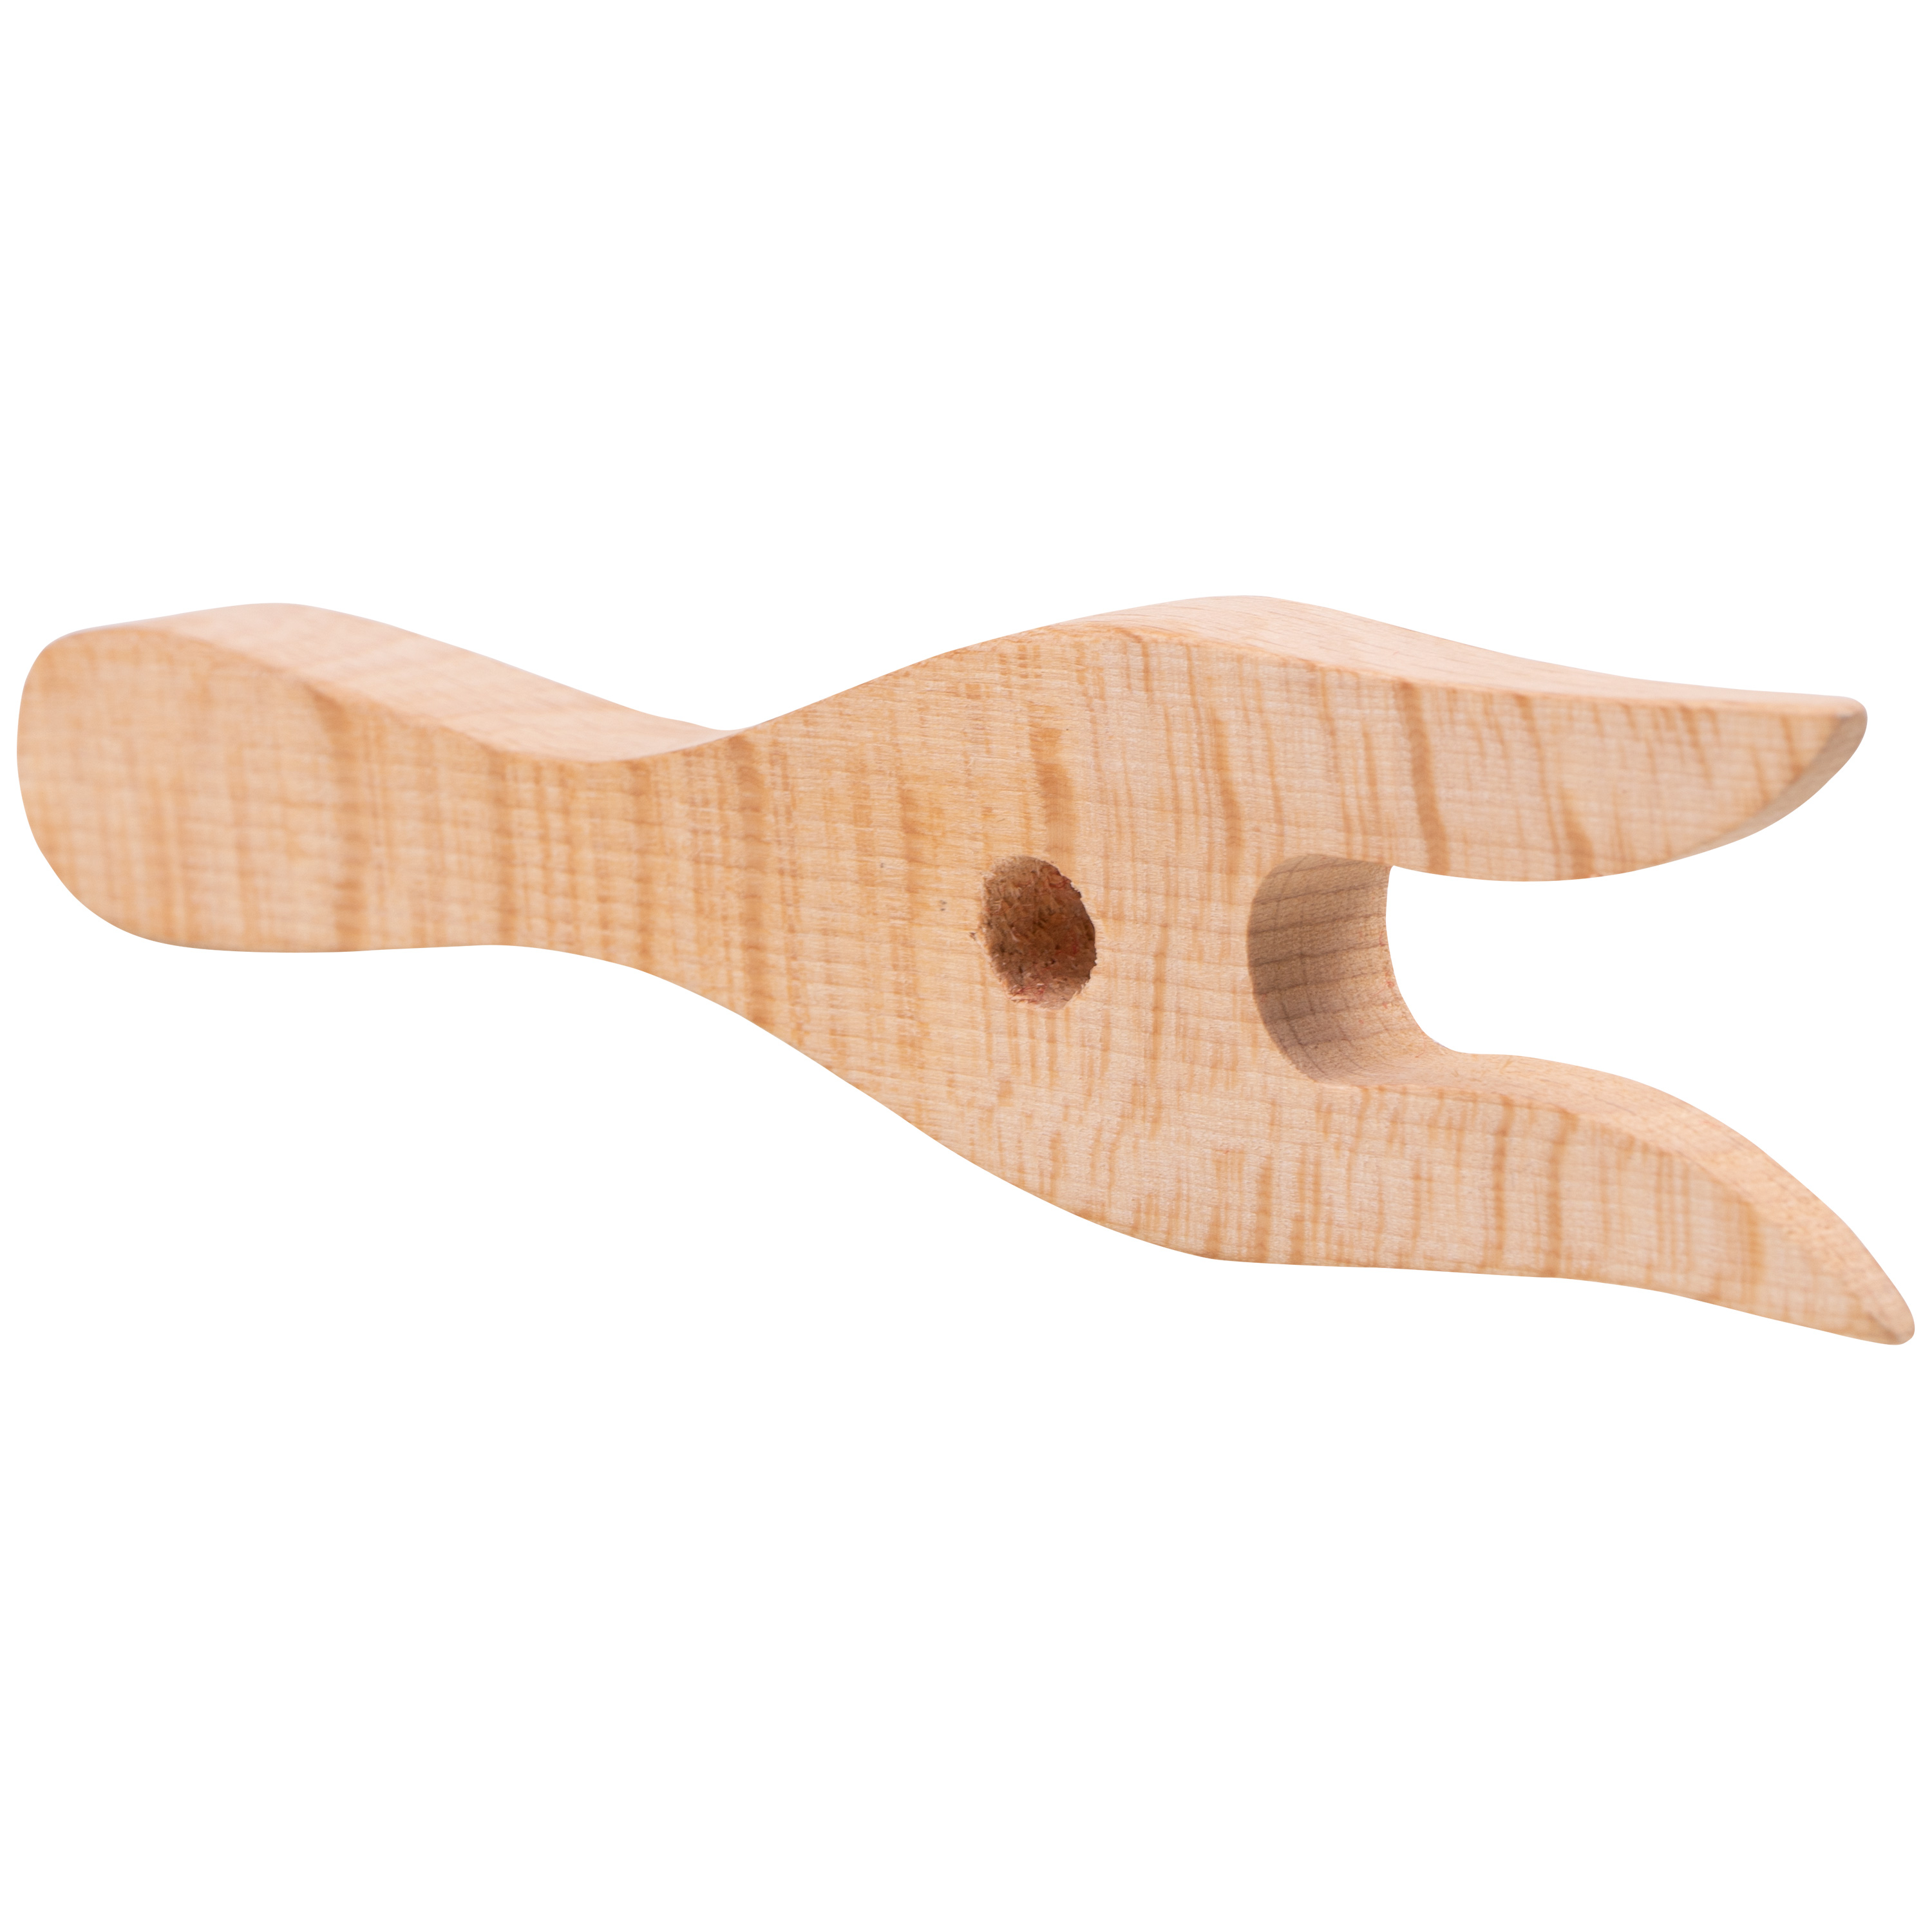 Strickgabel aus Holz, L: 16,5 cm